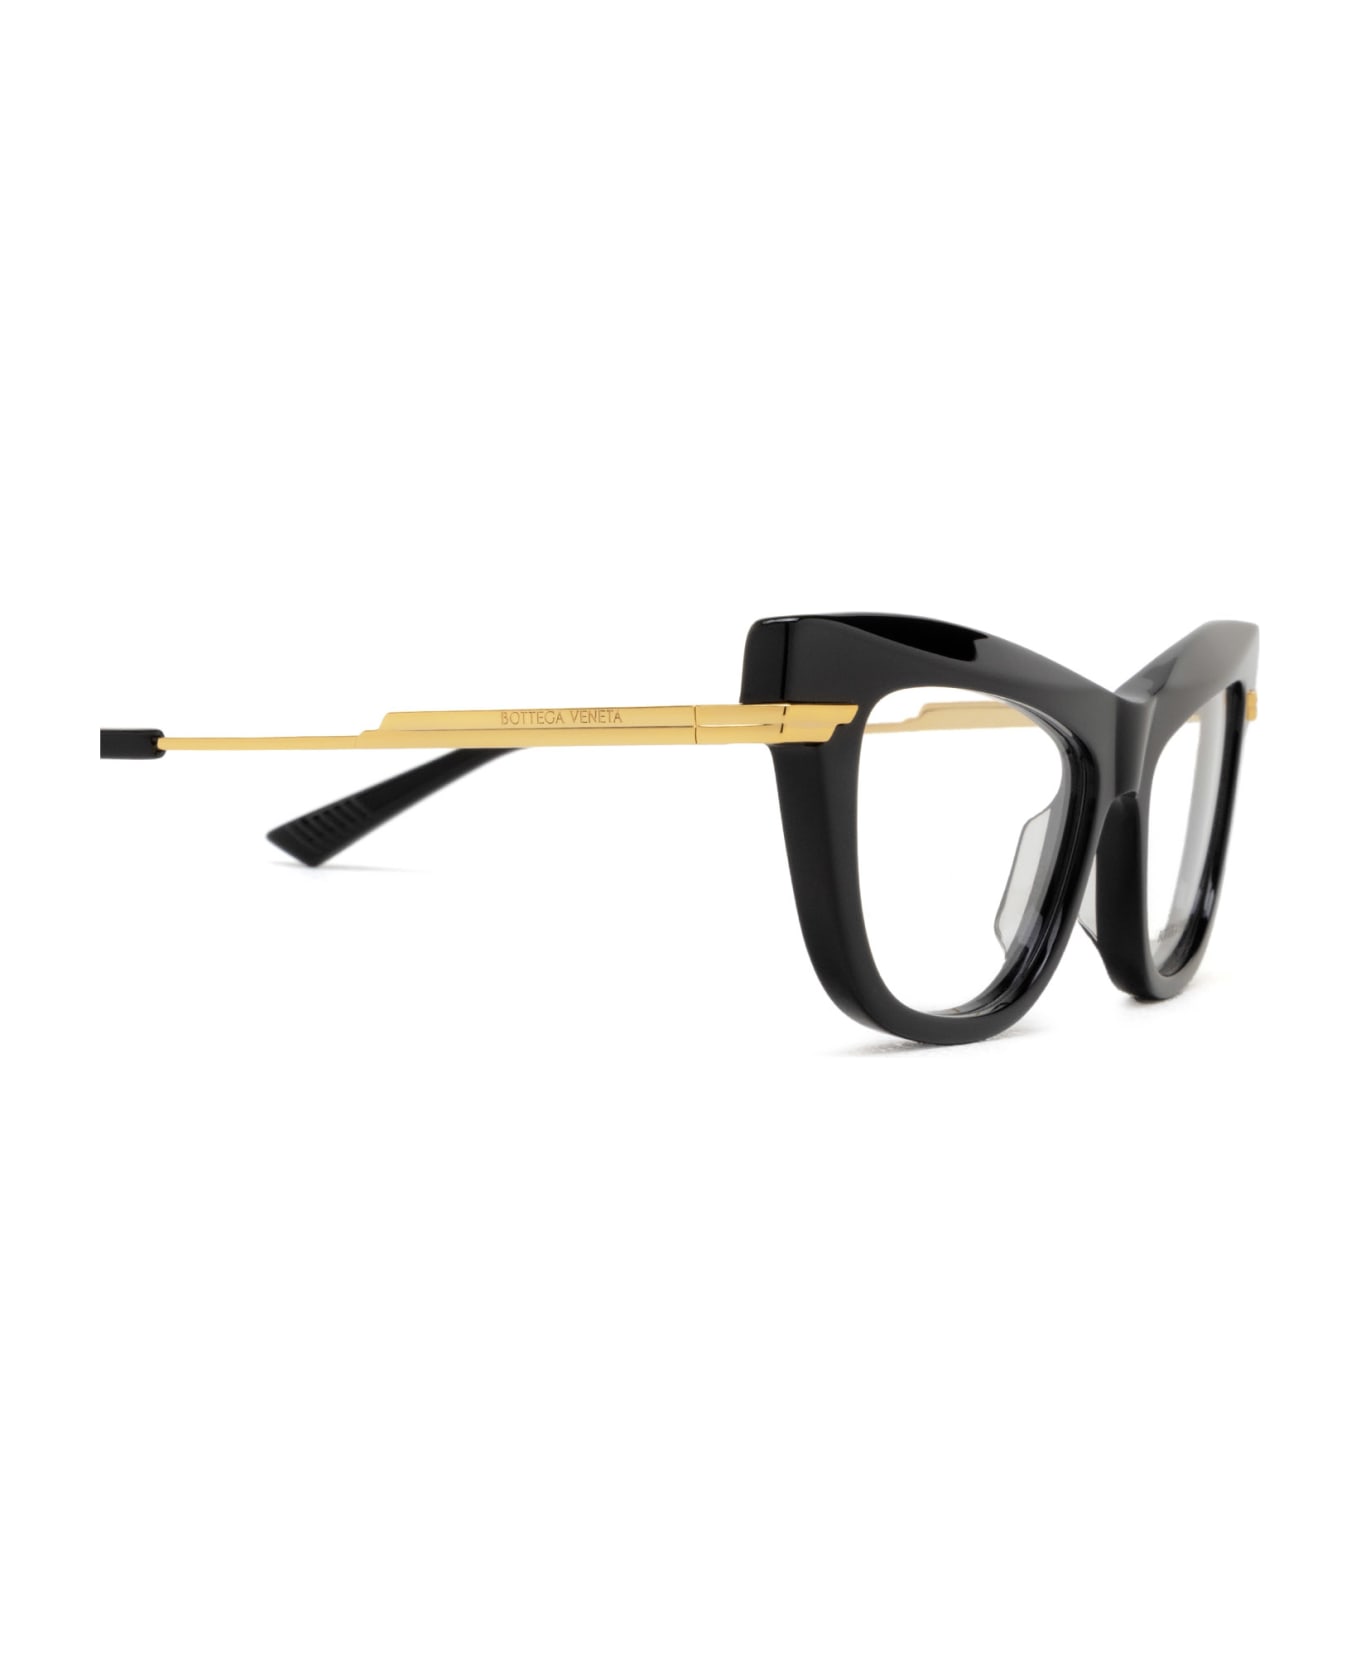 Bottega Veneta Eyewear Bv1266o Black Glasses - Black